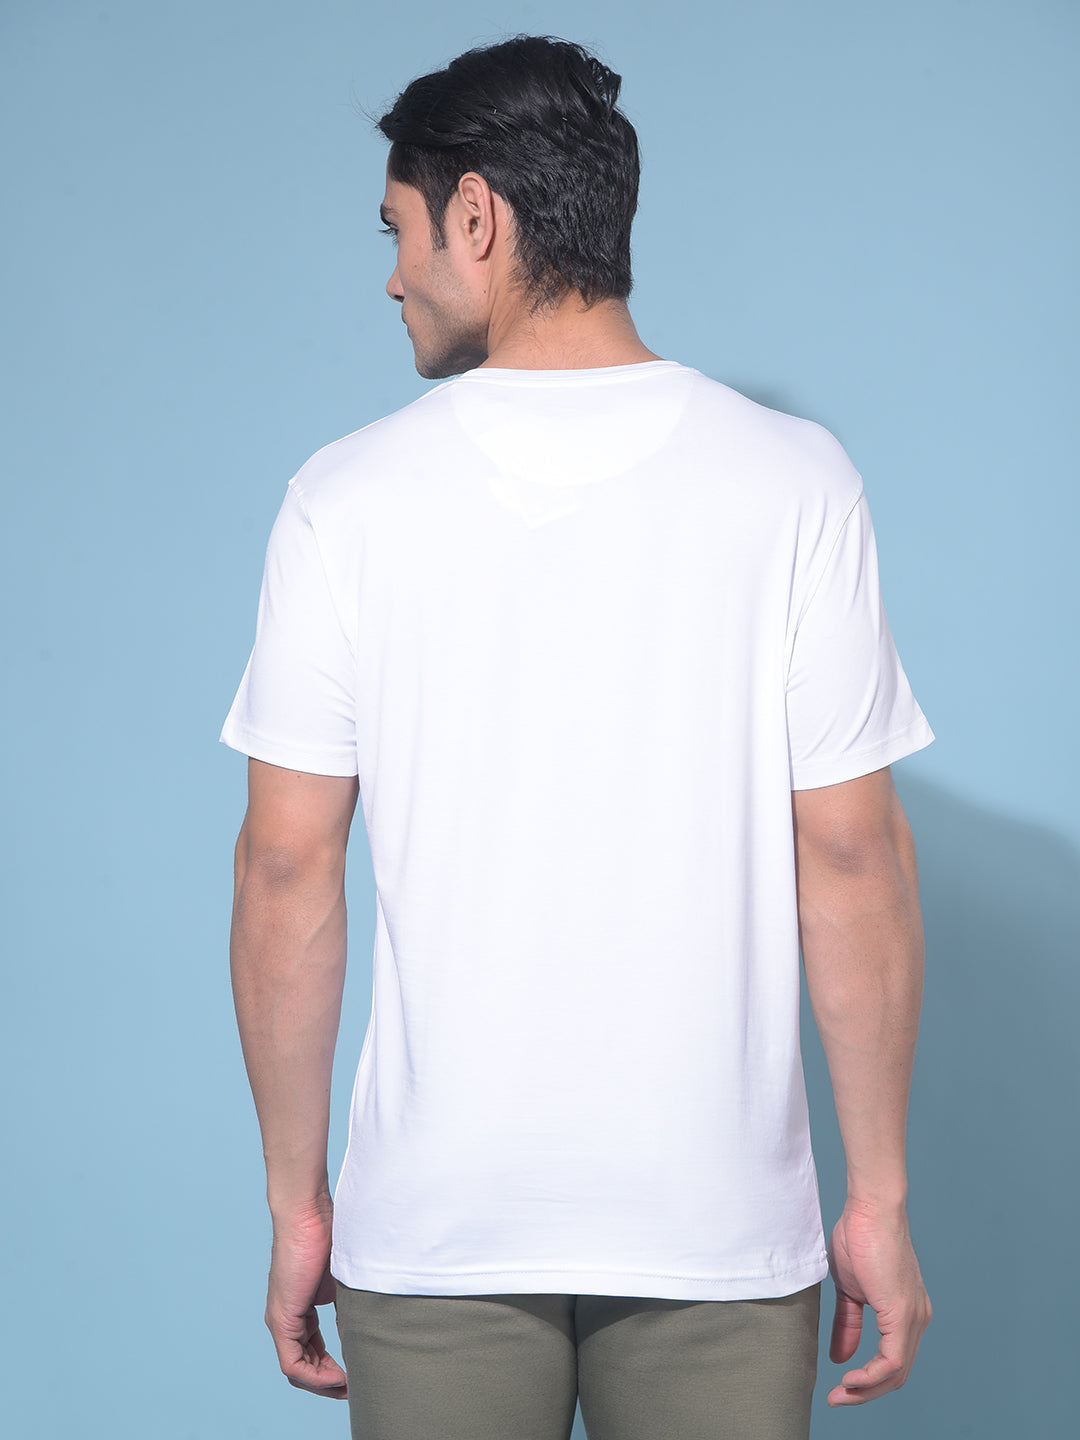 White Typographic T-Shirt-Men T-Shirts-Crimsoune Club